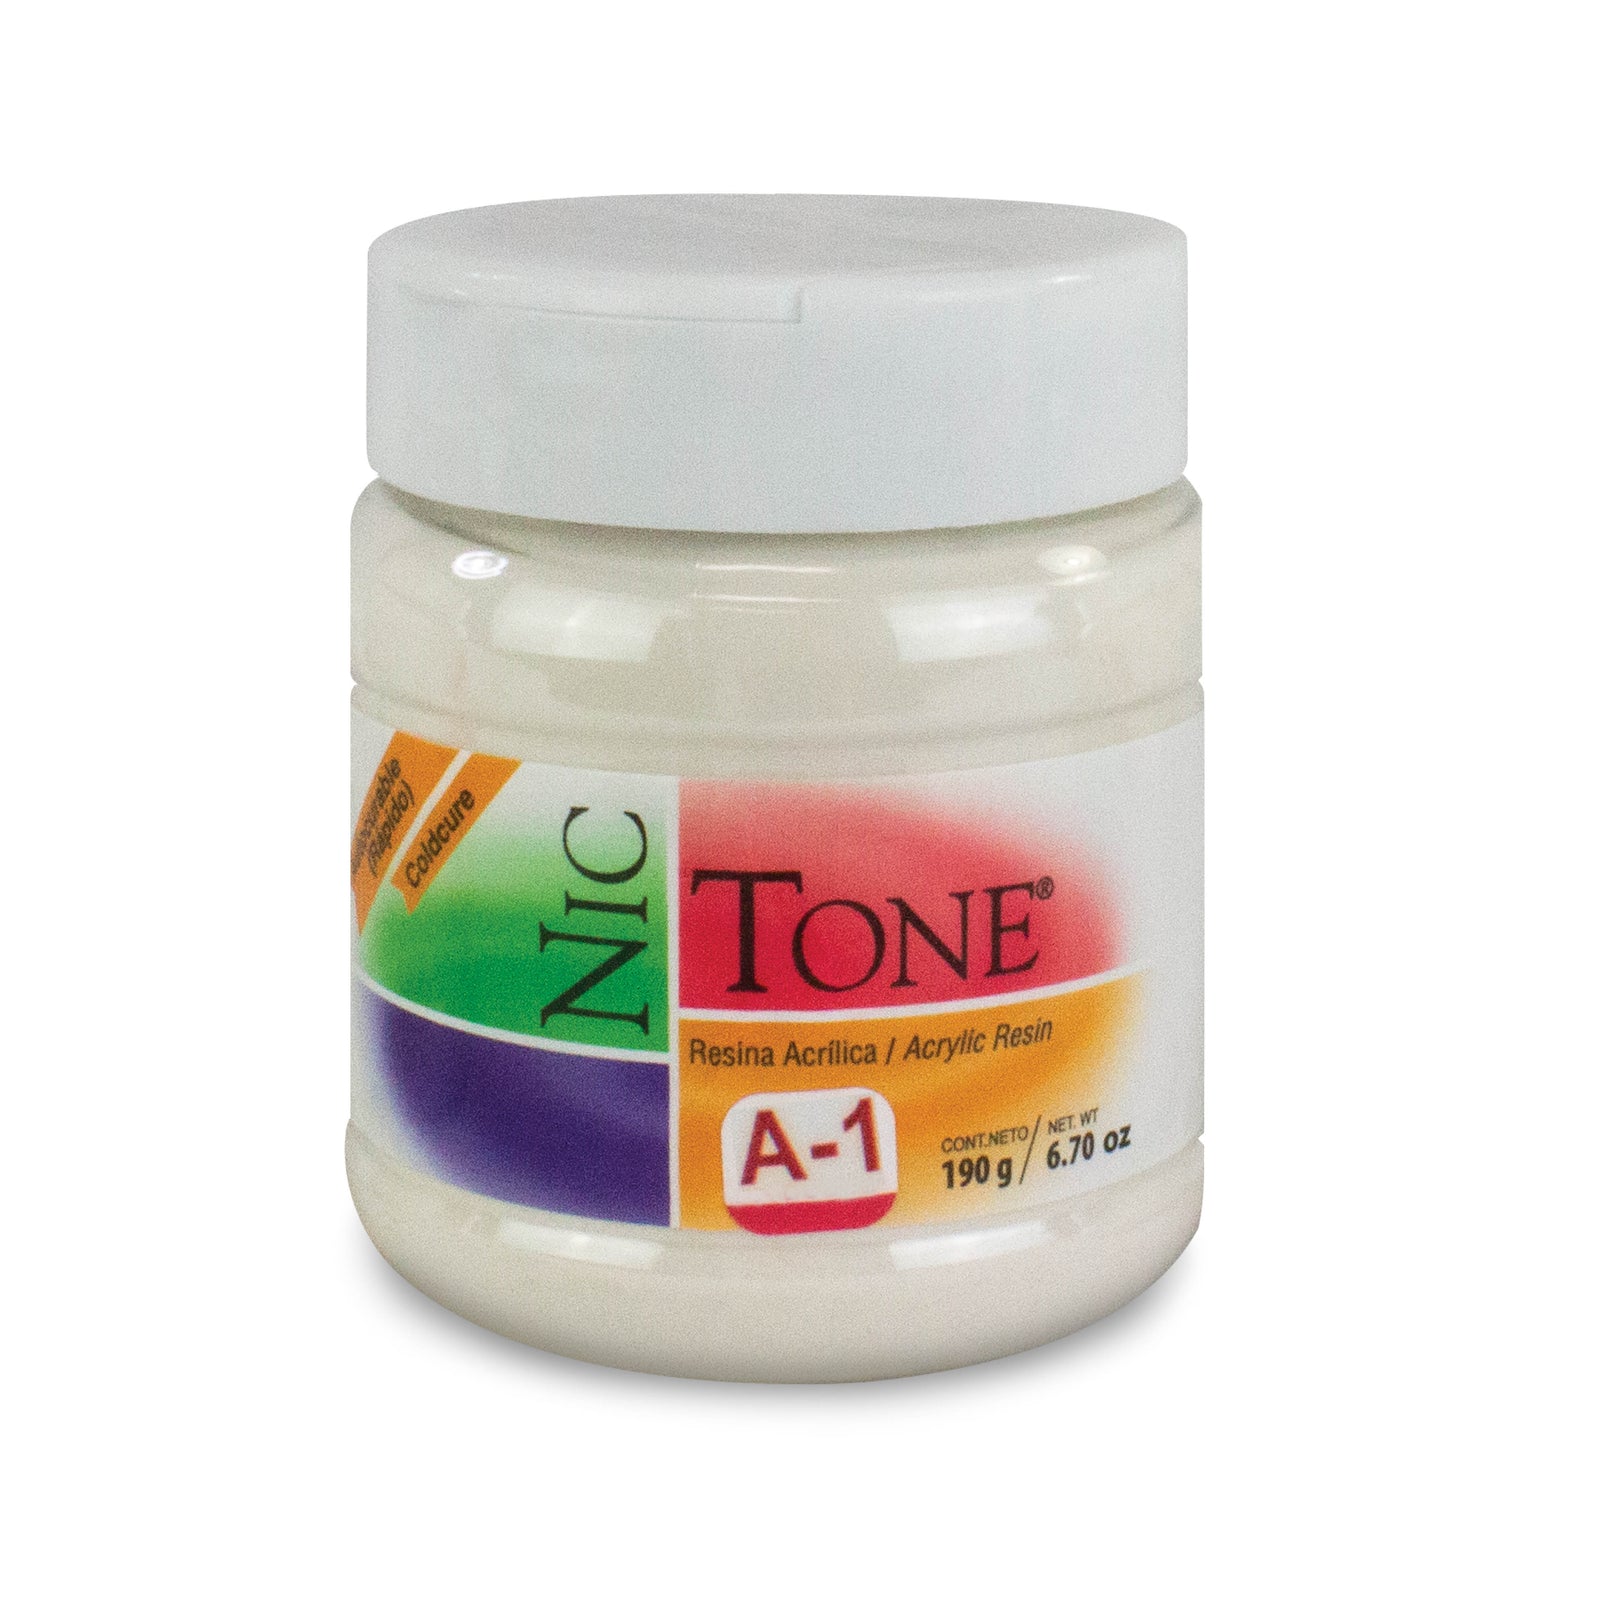 NIC TONE Acrylic Resin Powder Coldcure R6V 500gm. by MDC Dental